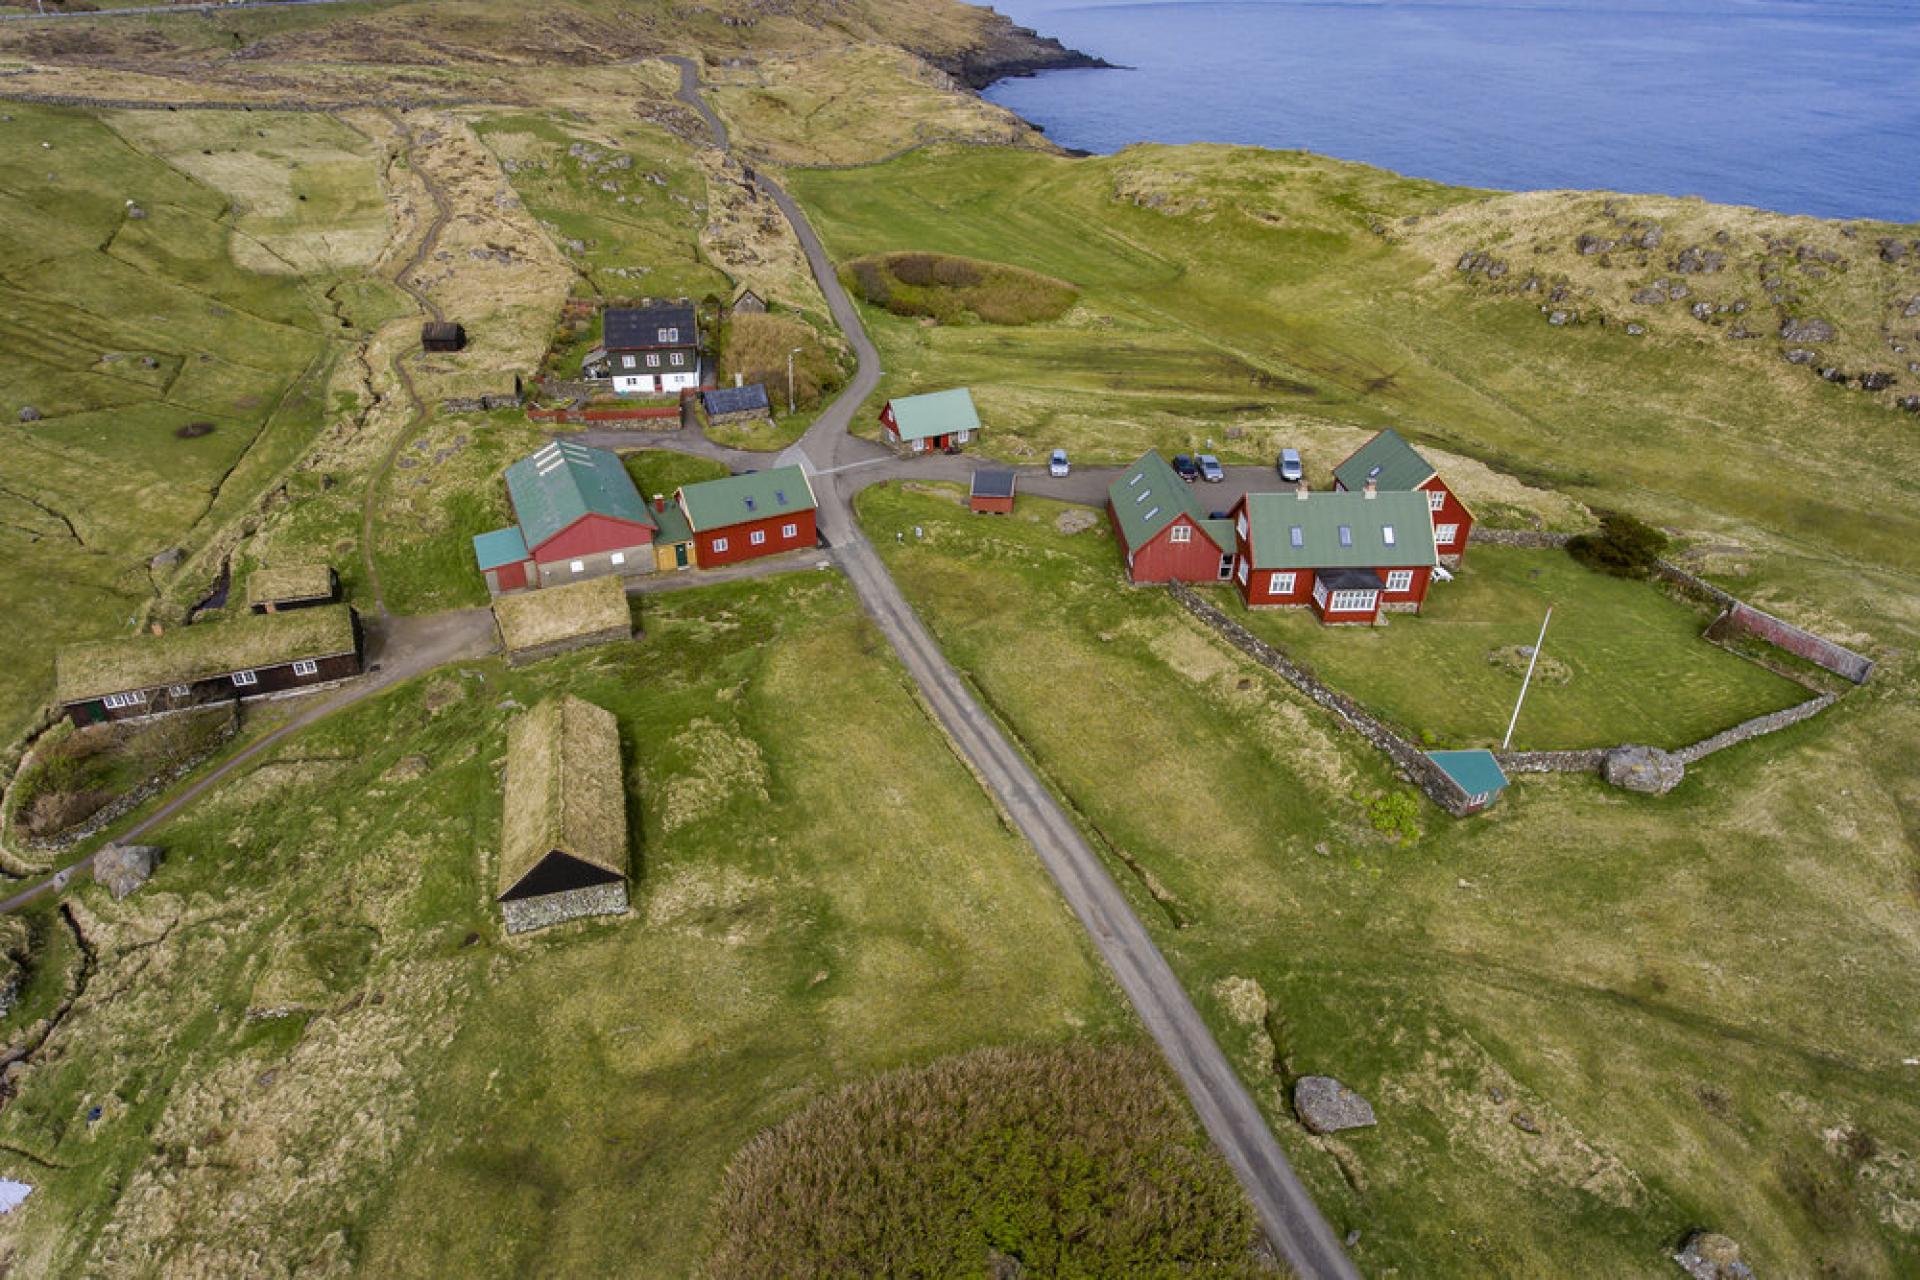 Thumbnail of - Old town of Hoyvík